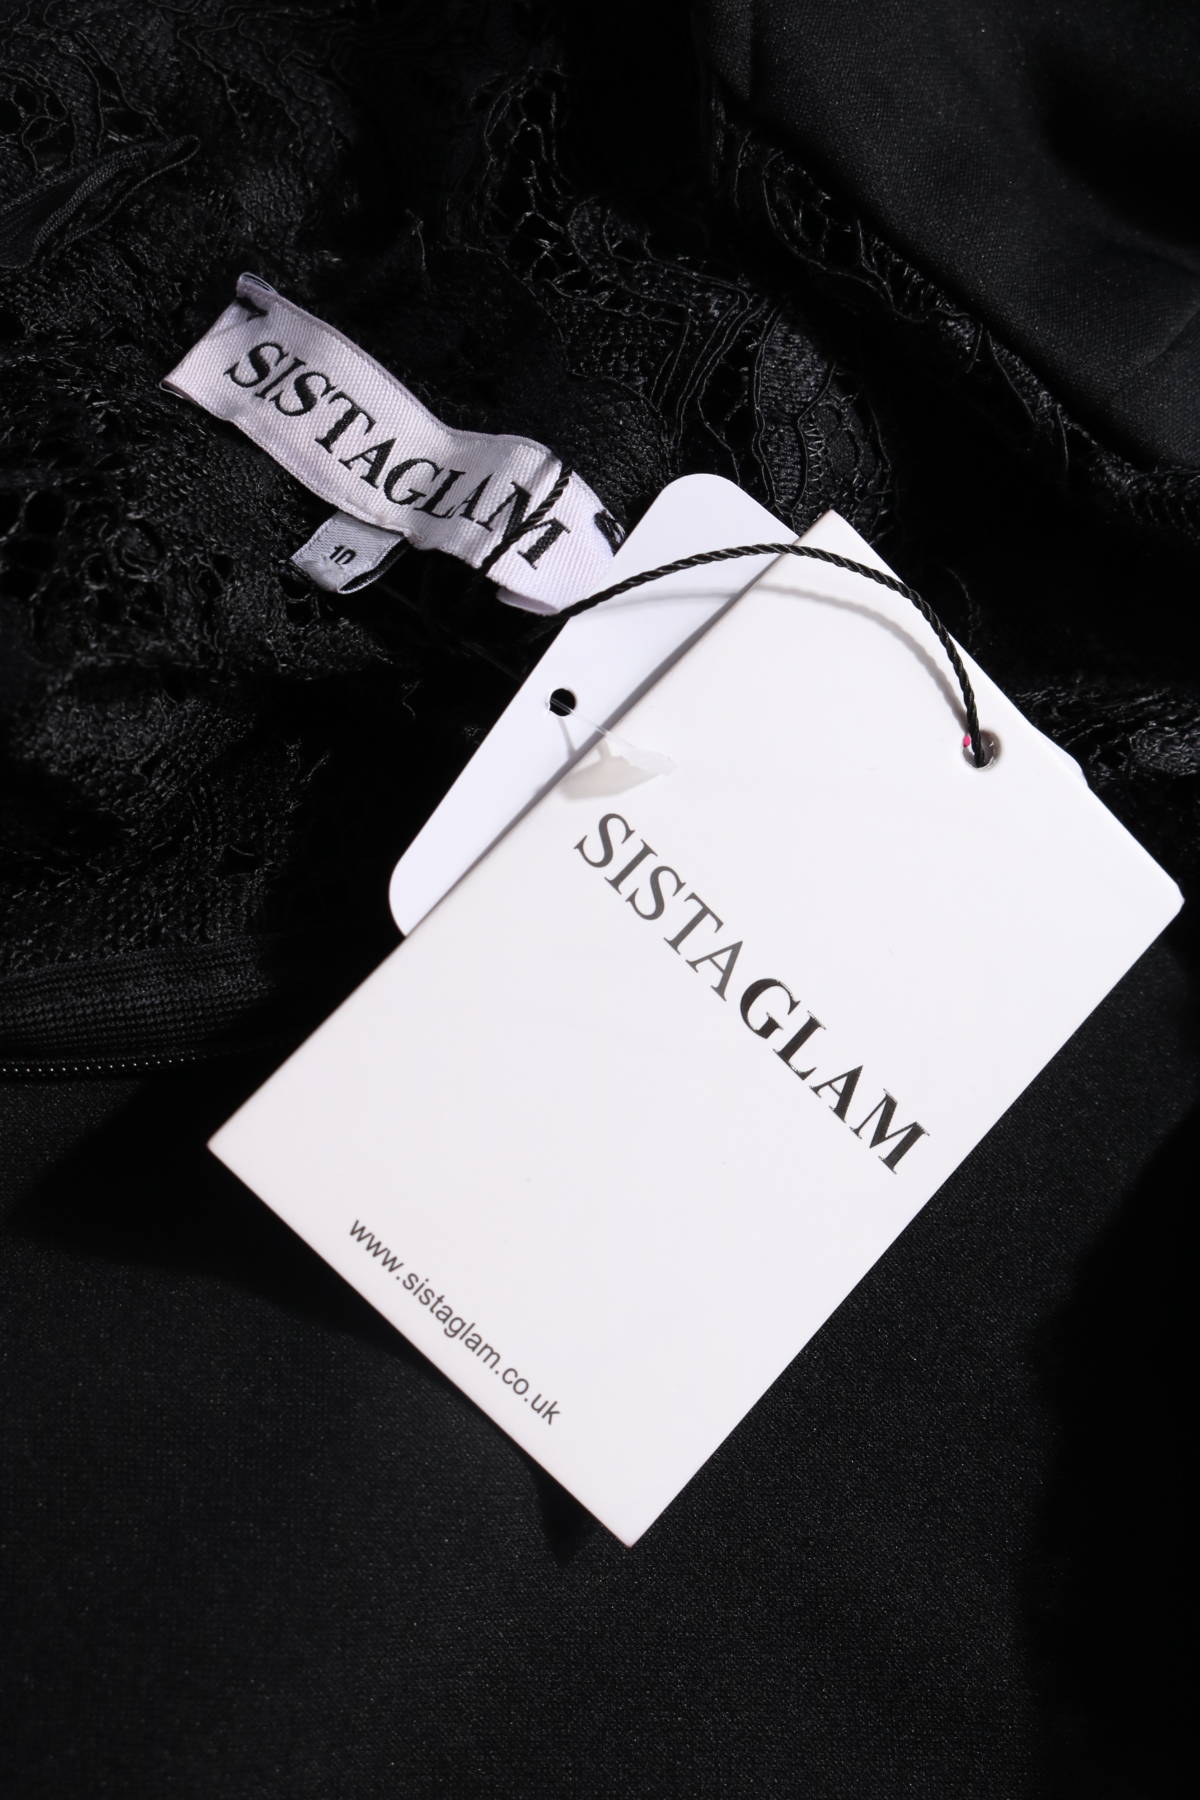 Официална рокля SISTAGLAM3